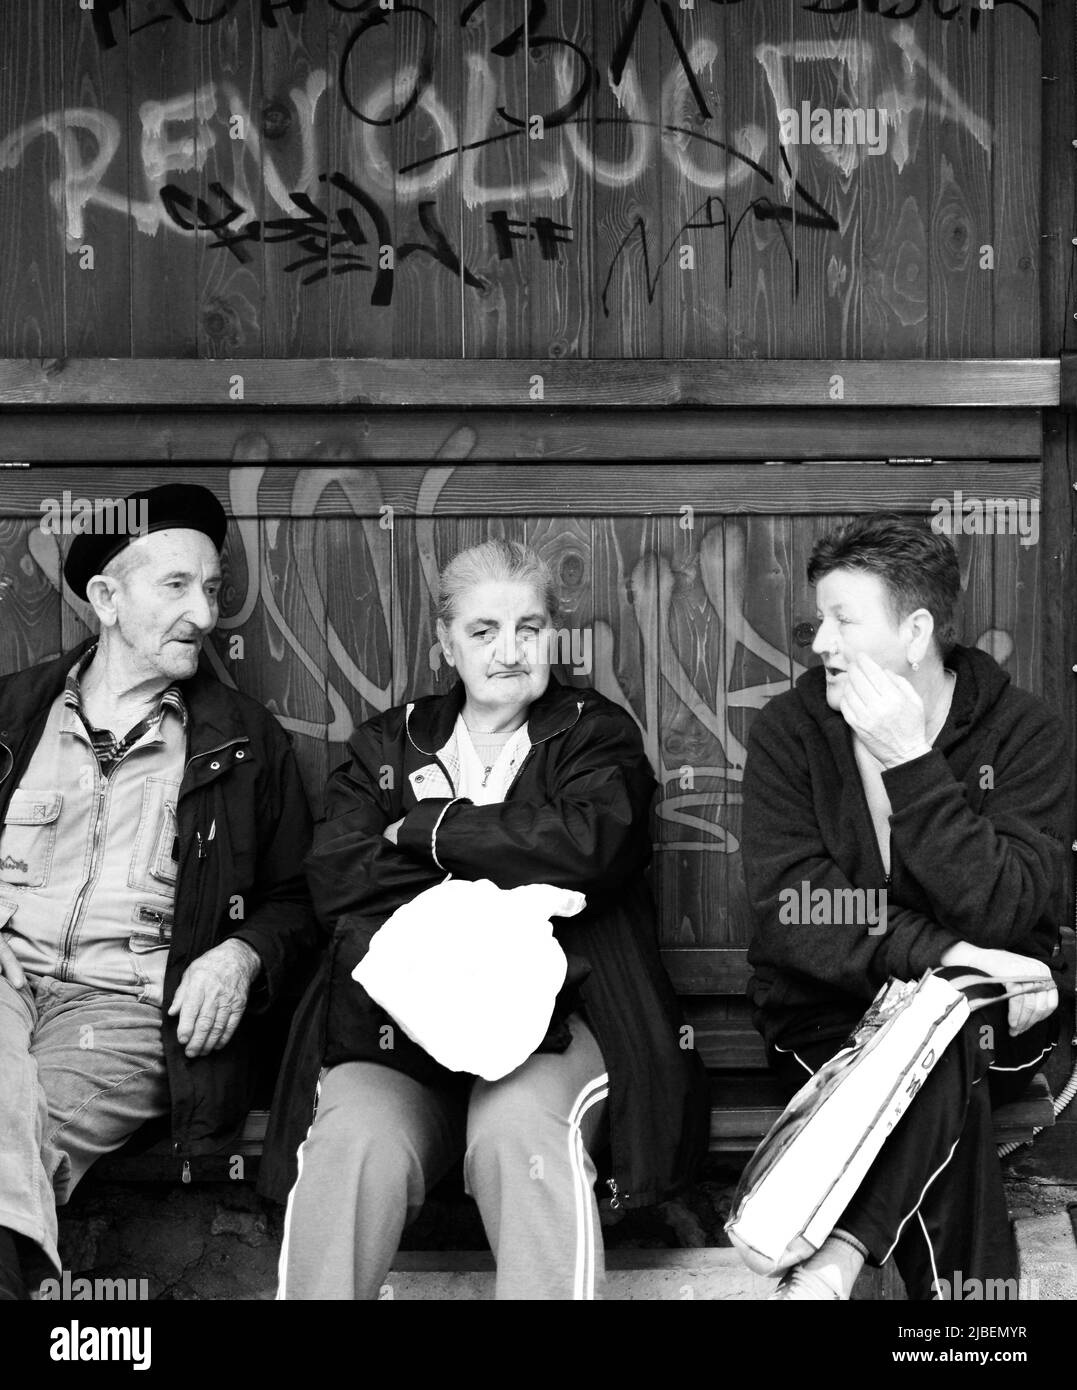 Elderly Bosnians sitting under a Revolution graffiti in Sarajevo, Bosnia and Herzegovina. Stock Photo